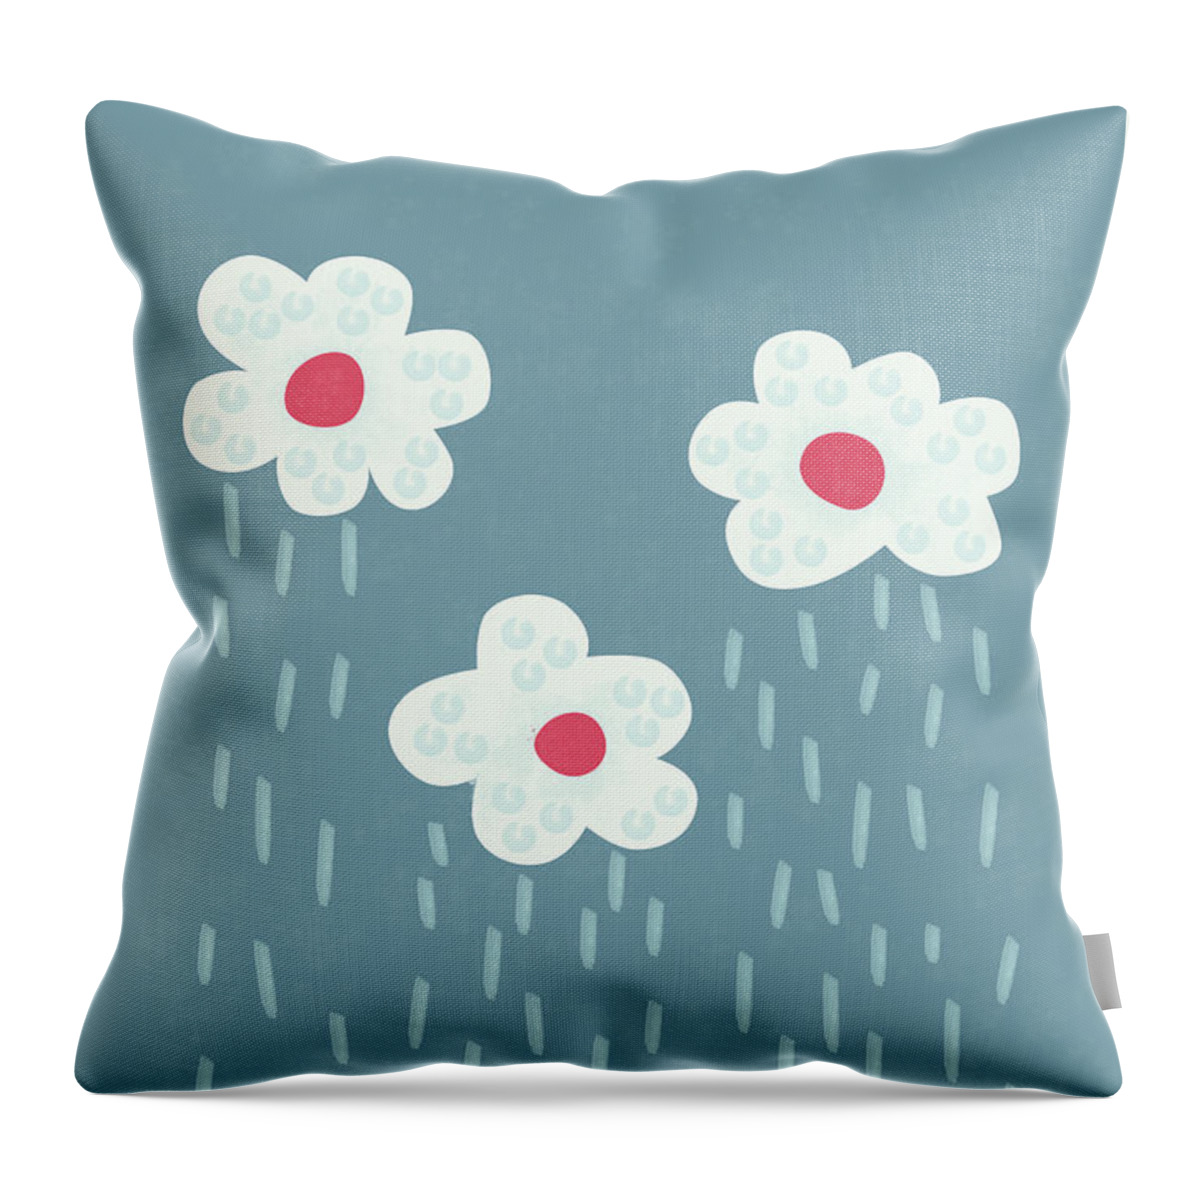 Raining Throw Pillow featuring the digital art Raining Flowery Clouds by Boriana Giormova